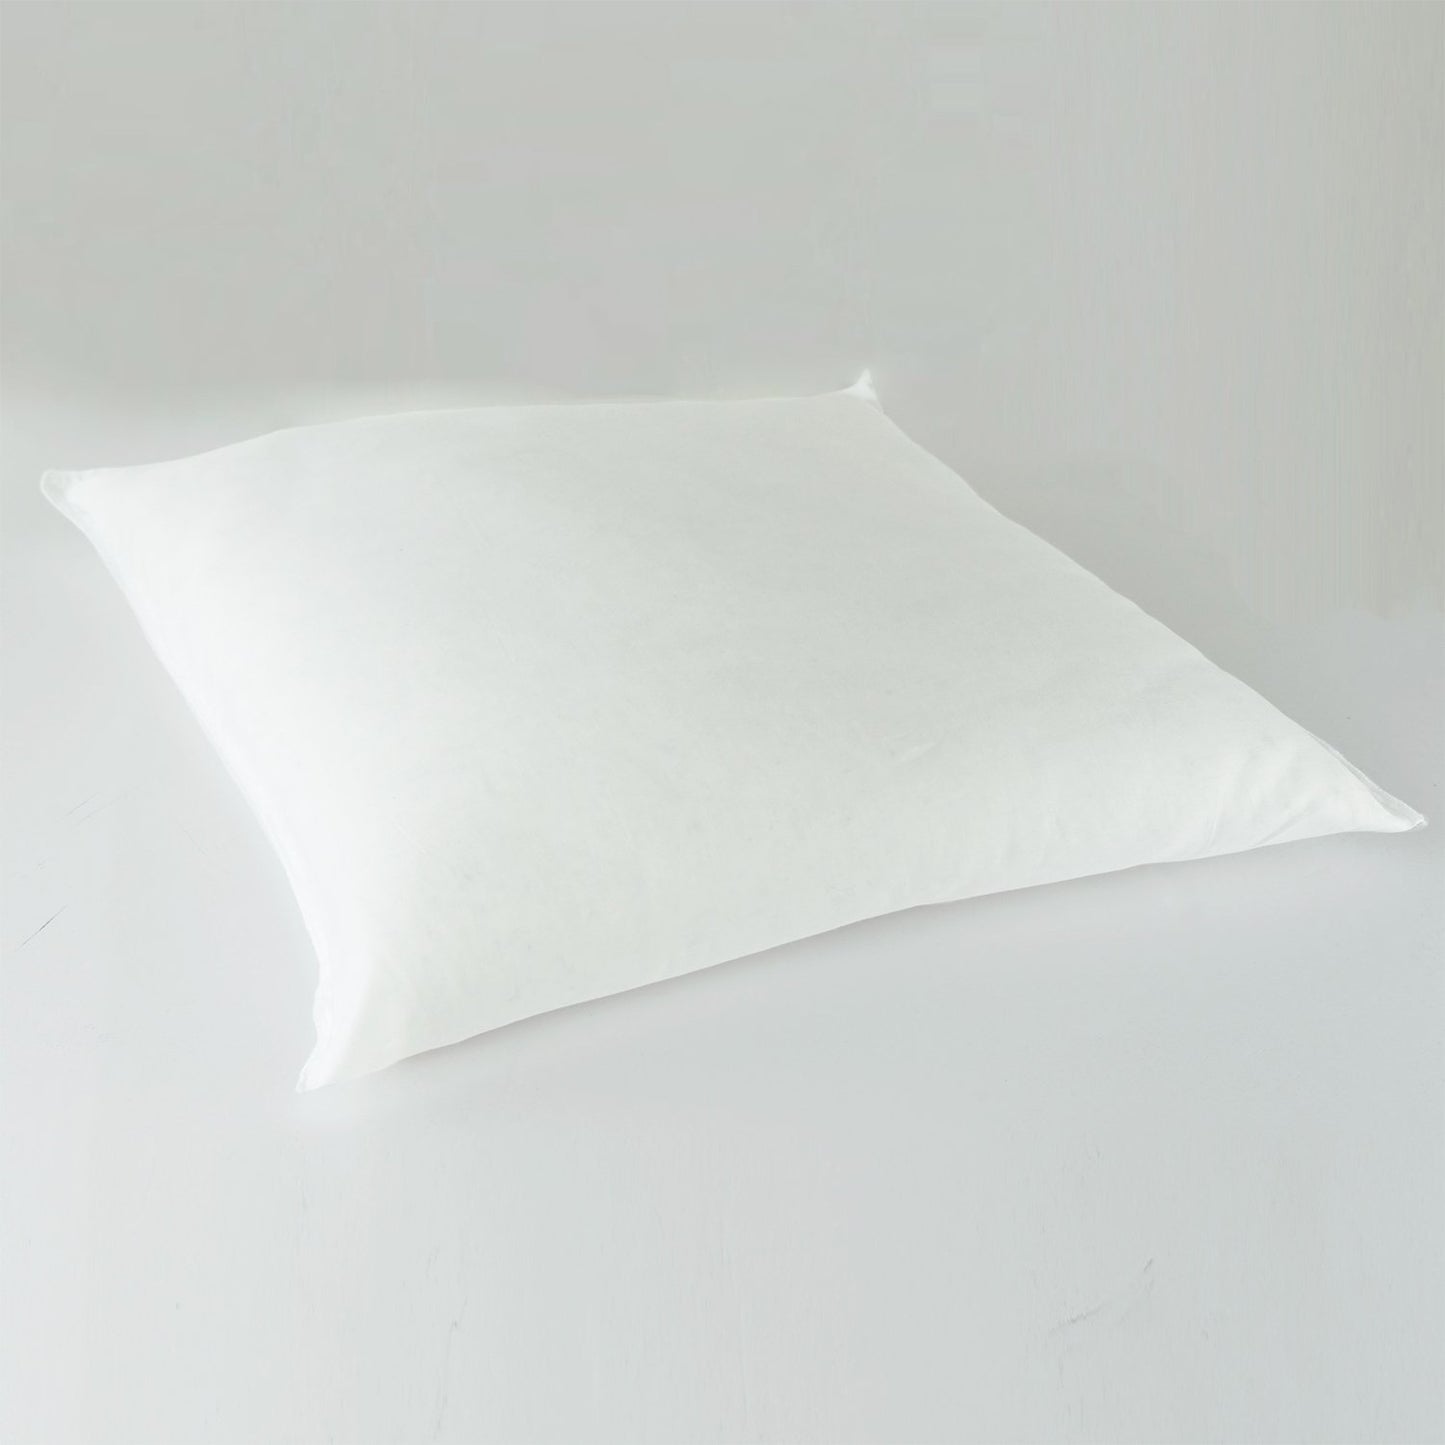 J-Life Nami Blue Zabuton Floor Pillow_Pillows & Shams_Zabuton Floor Pillows_100% Cotton_Reversible